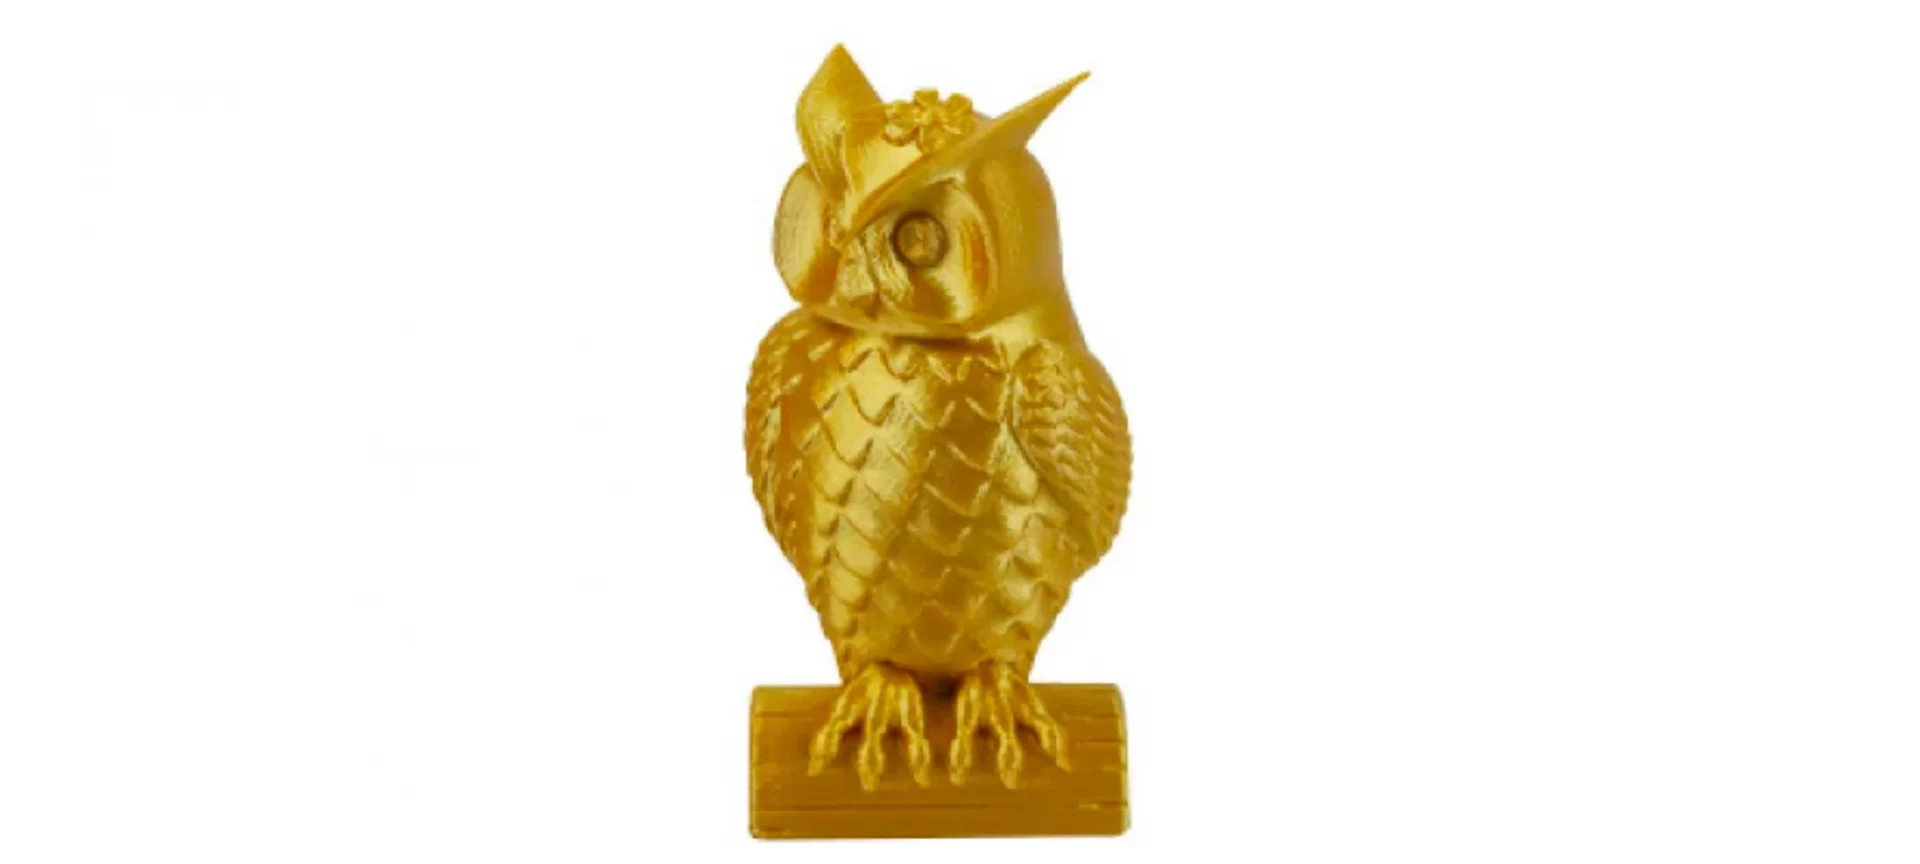 3D printed owl